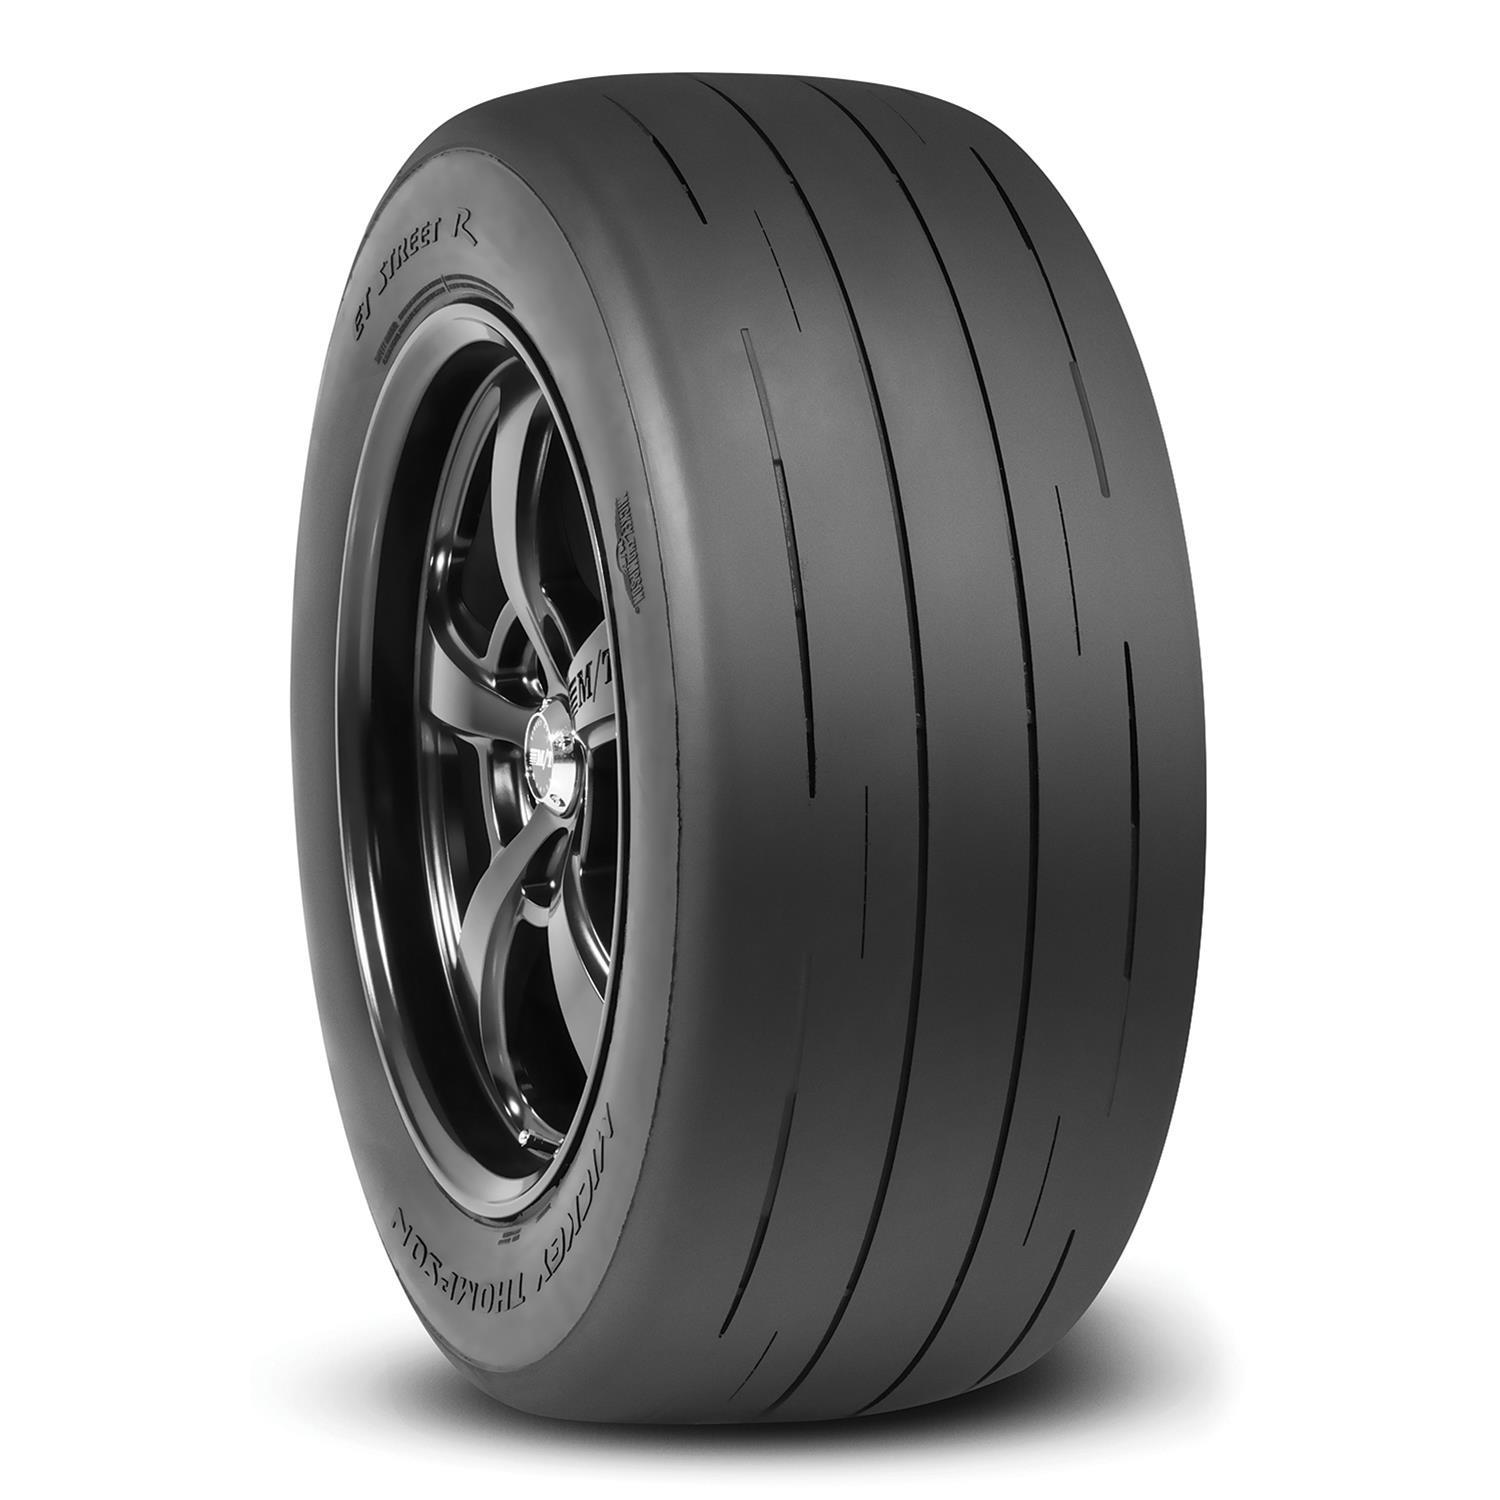 P255/60R15 ET Street R Tire - 255599